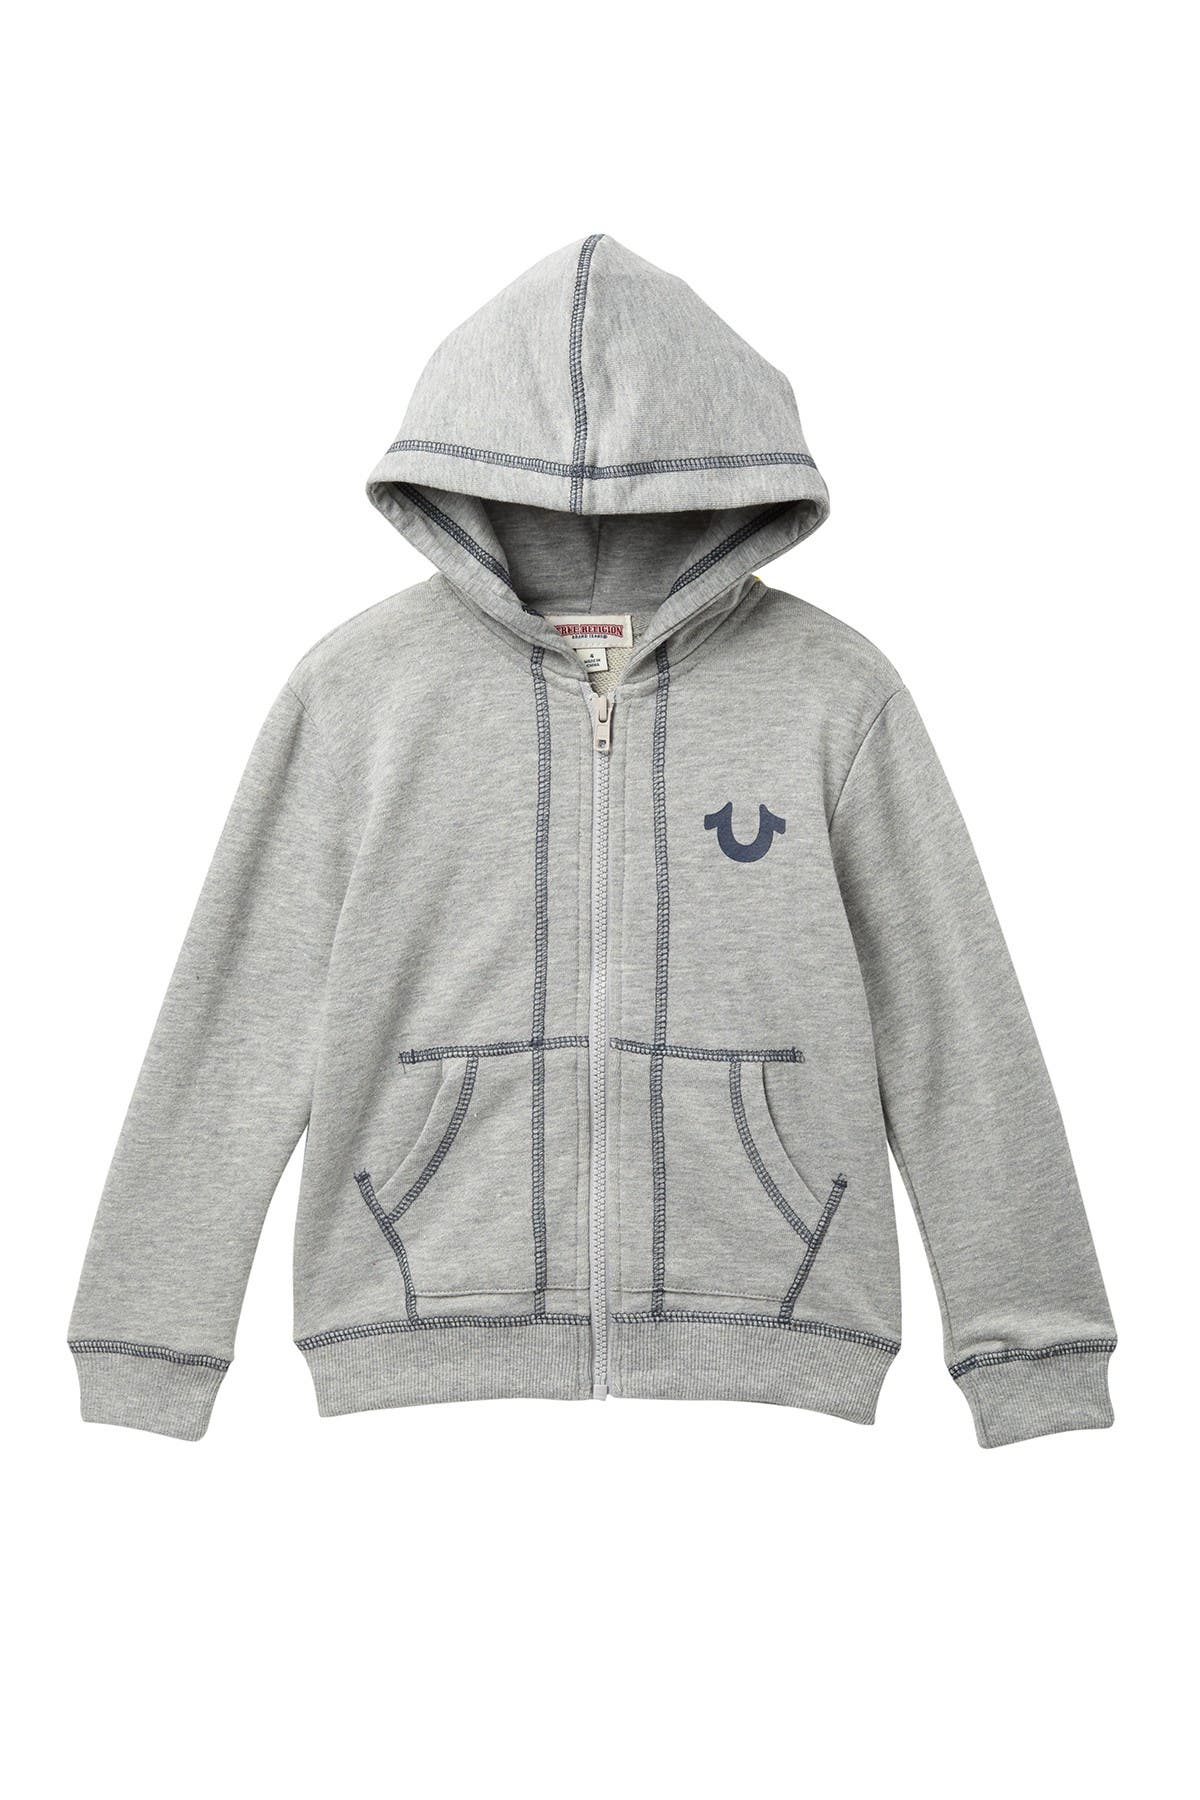 true religion full zip hoodie